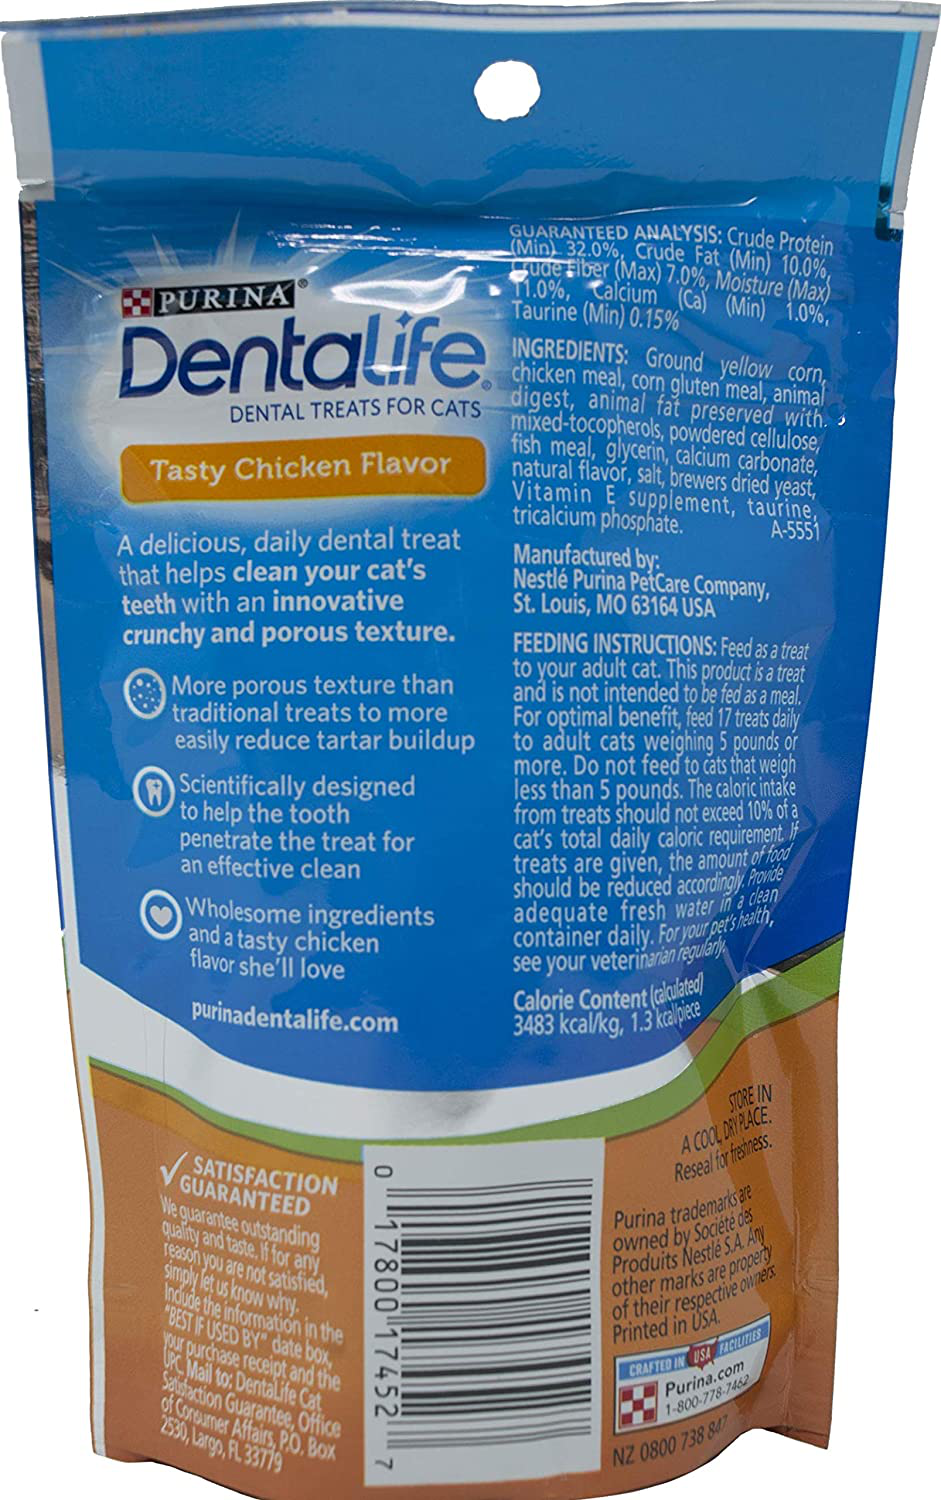 Purina Dentalife Dental Cat Treats 2 Flavor 4 Pouch Variety, 2 Each: Tasty Chicken, Savory Salmon (1.8 Ounces) | plus 2 Catnip Toys Bundle